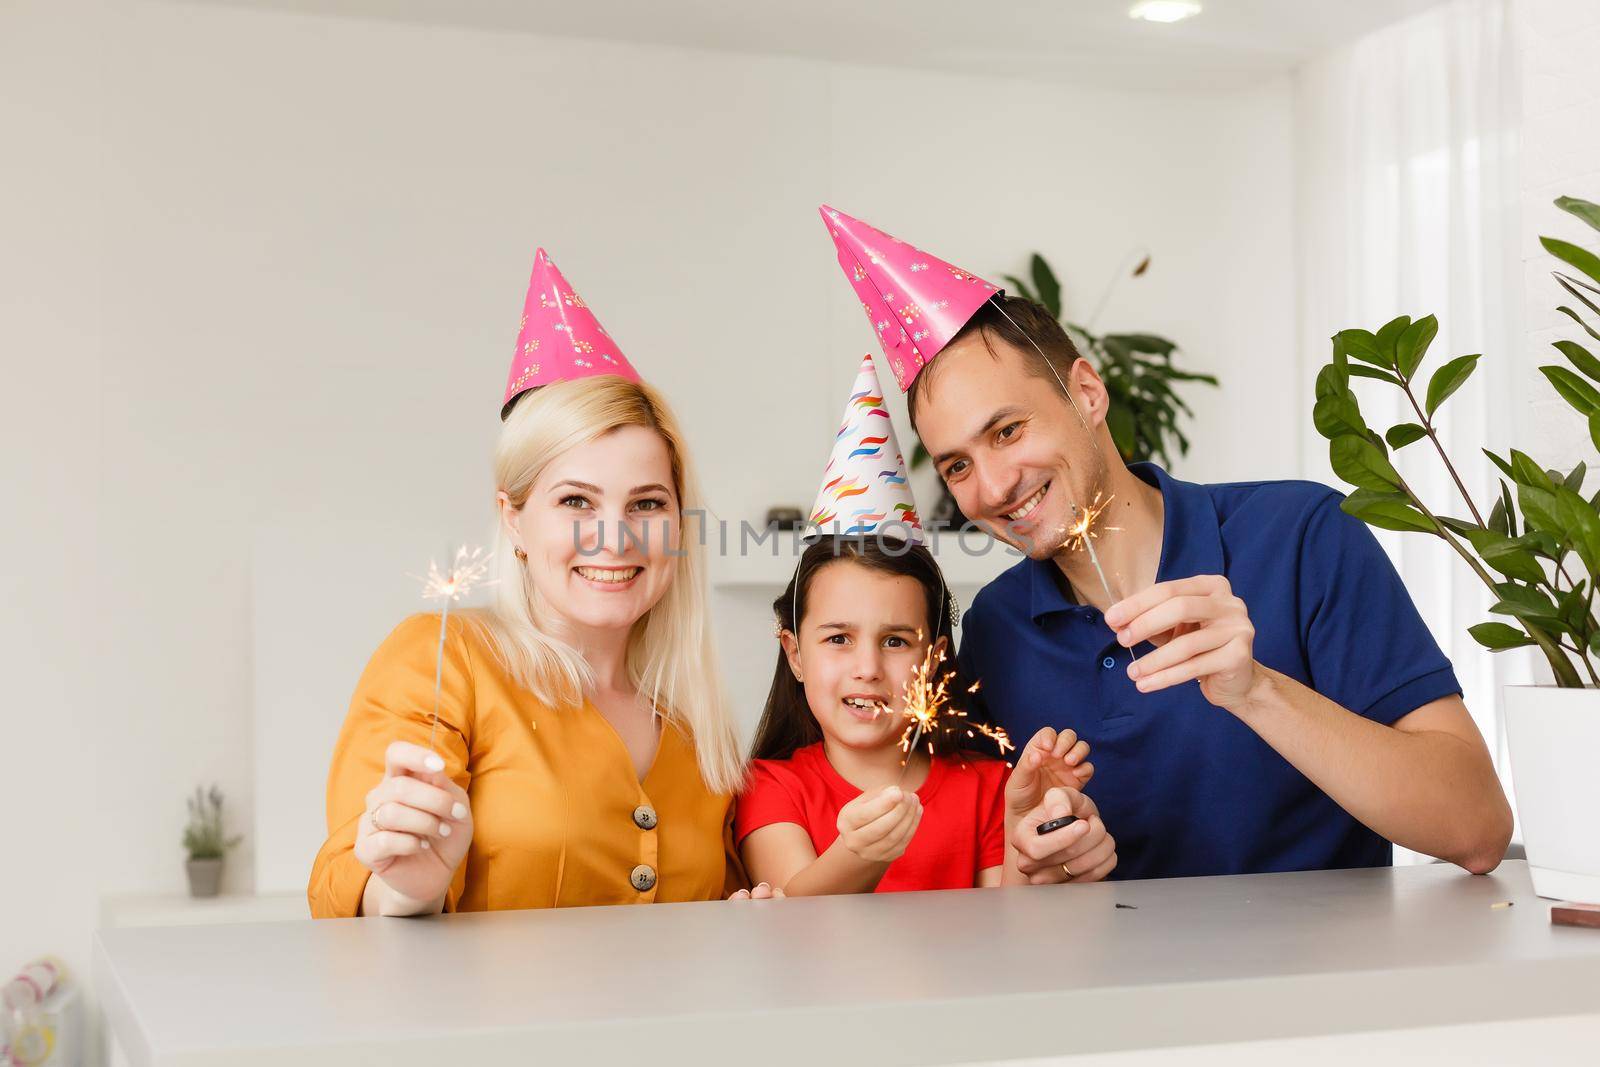 Happy family celebrating birthday via internet in quarantine time, self-isolation and family values, online birthday party by Andelov13